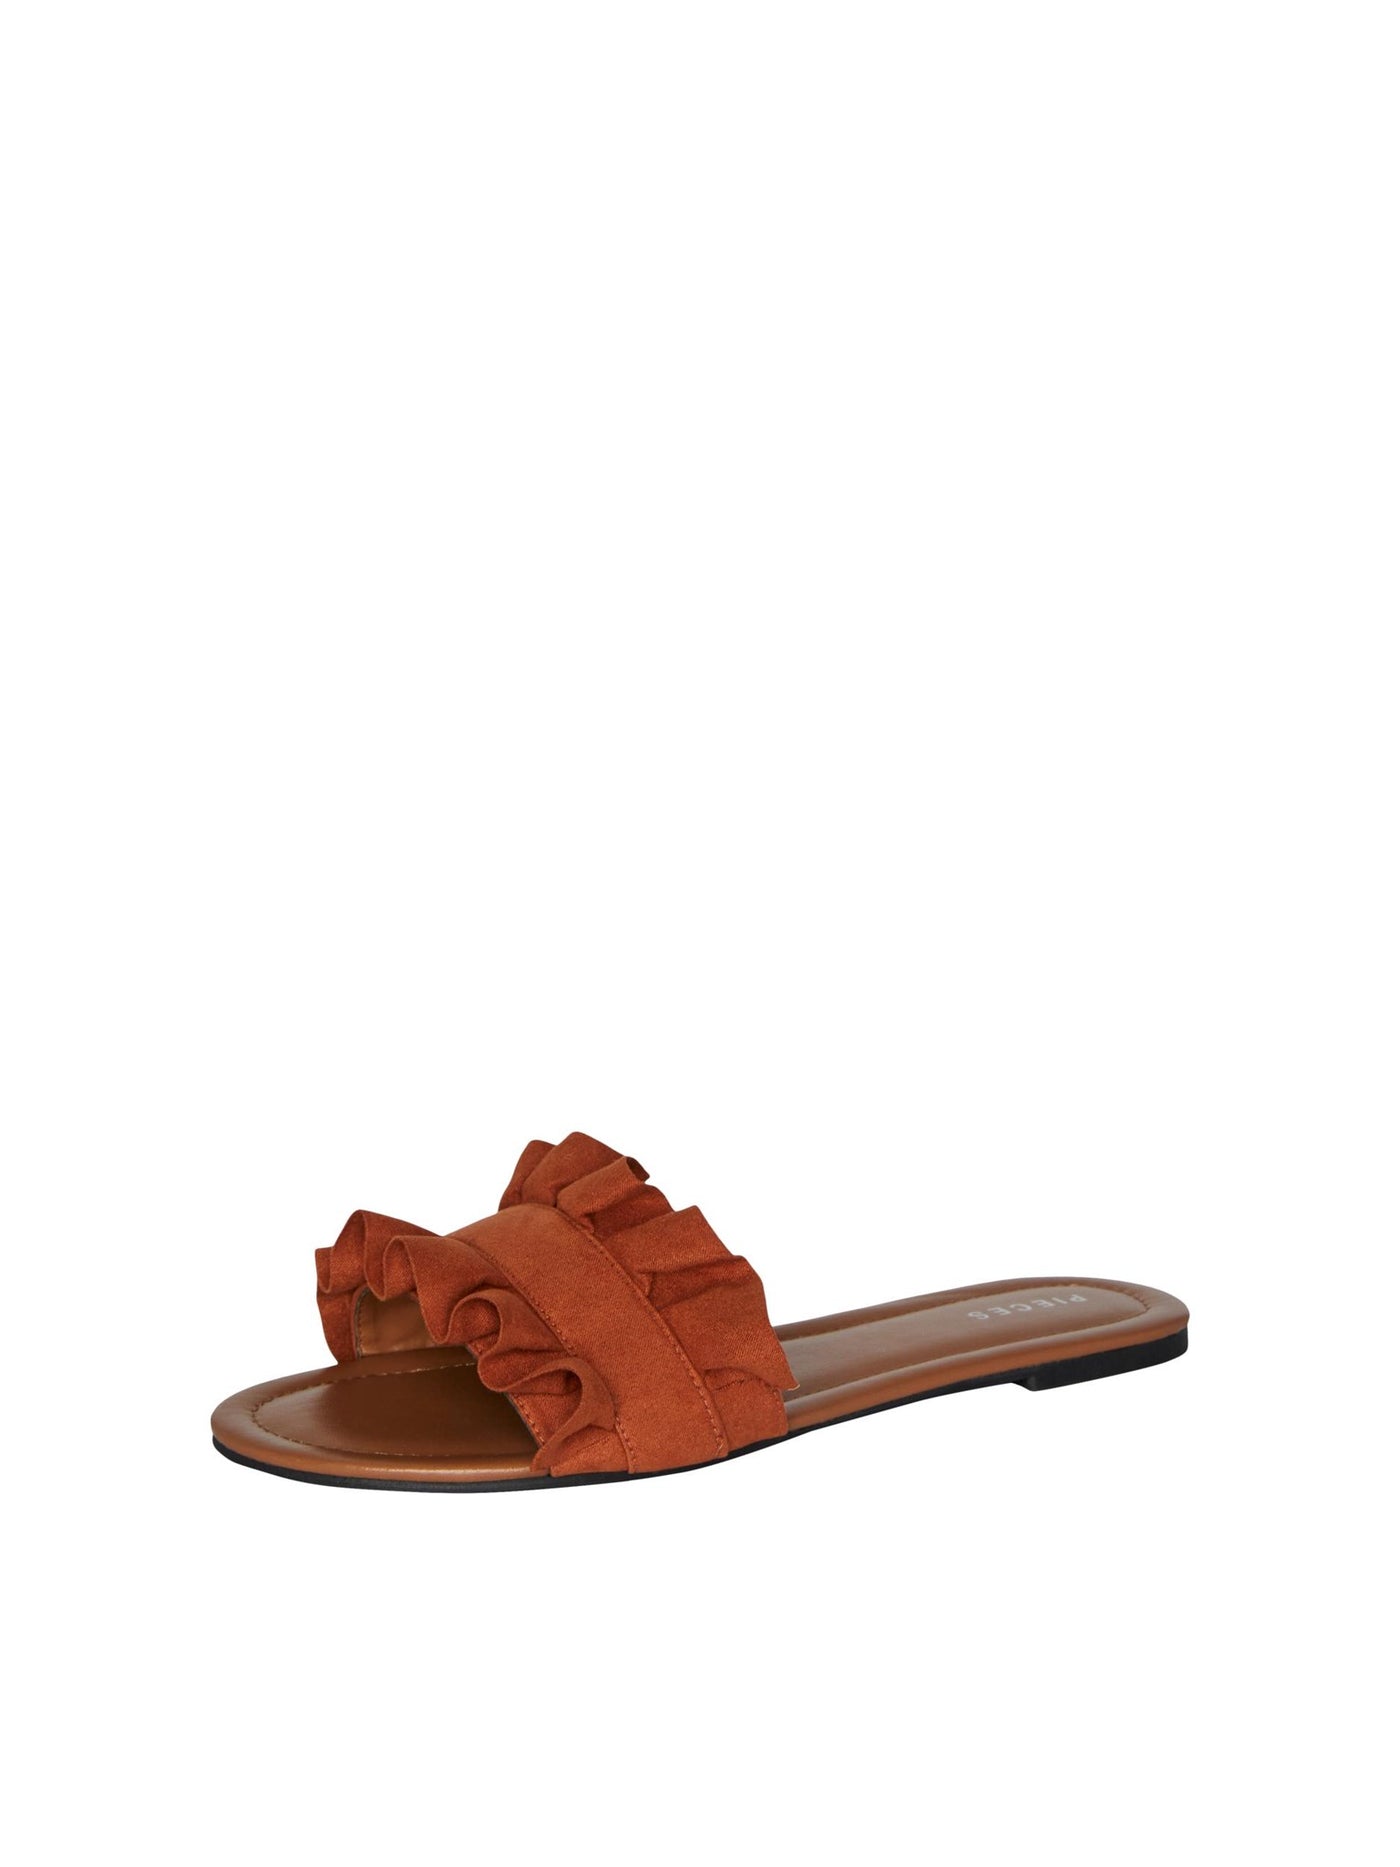 Nola Sandals - Coconut Shell - PIECES - Brown